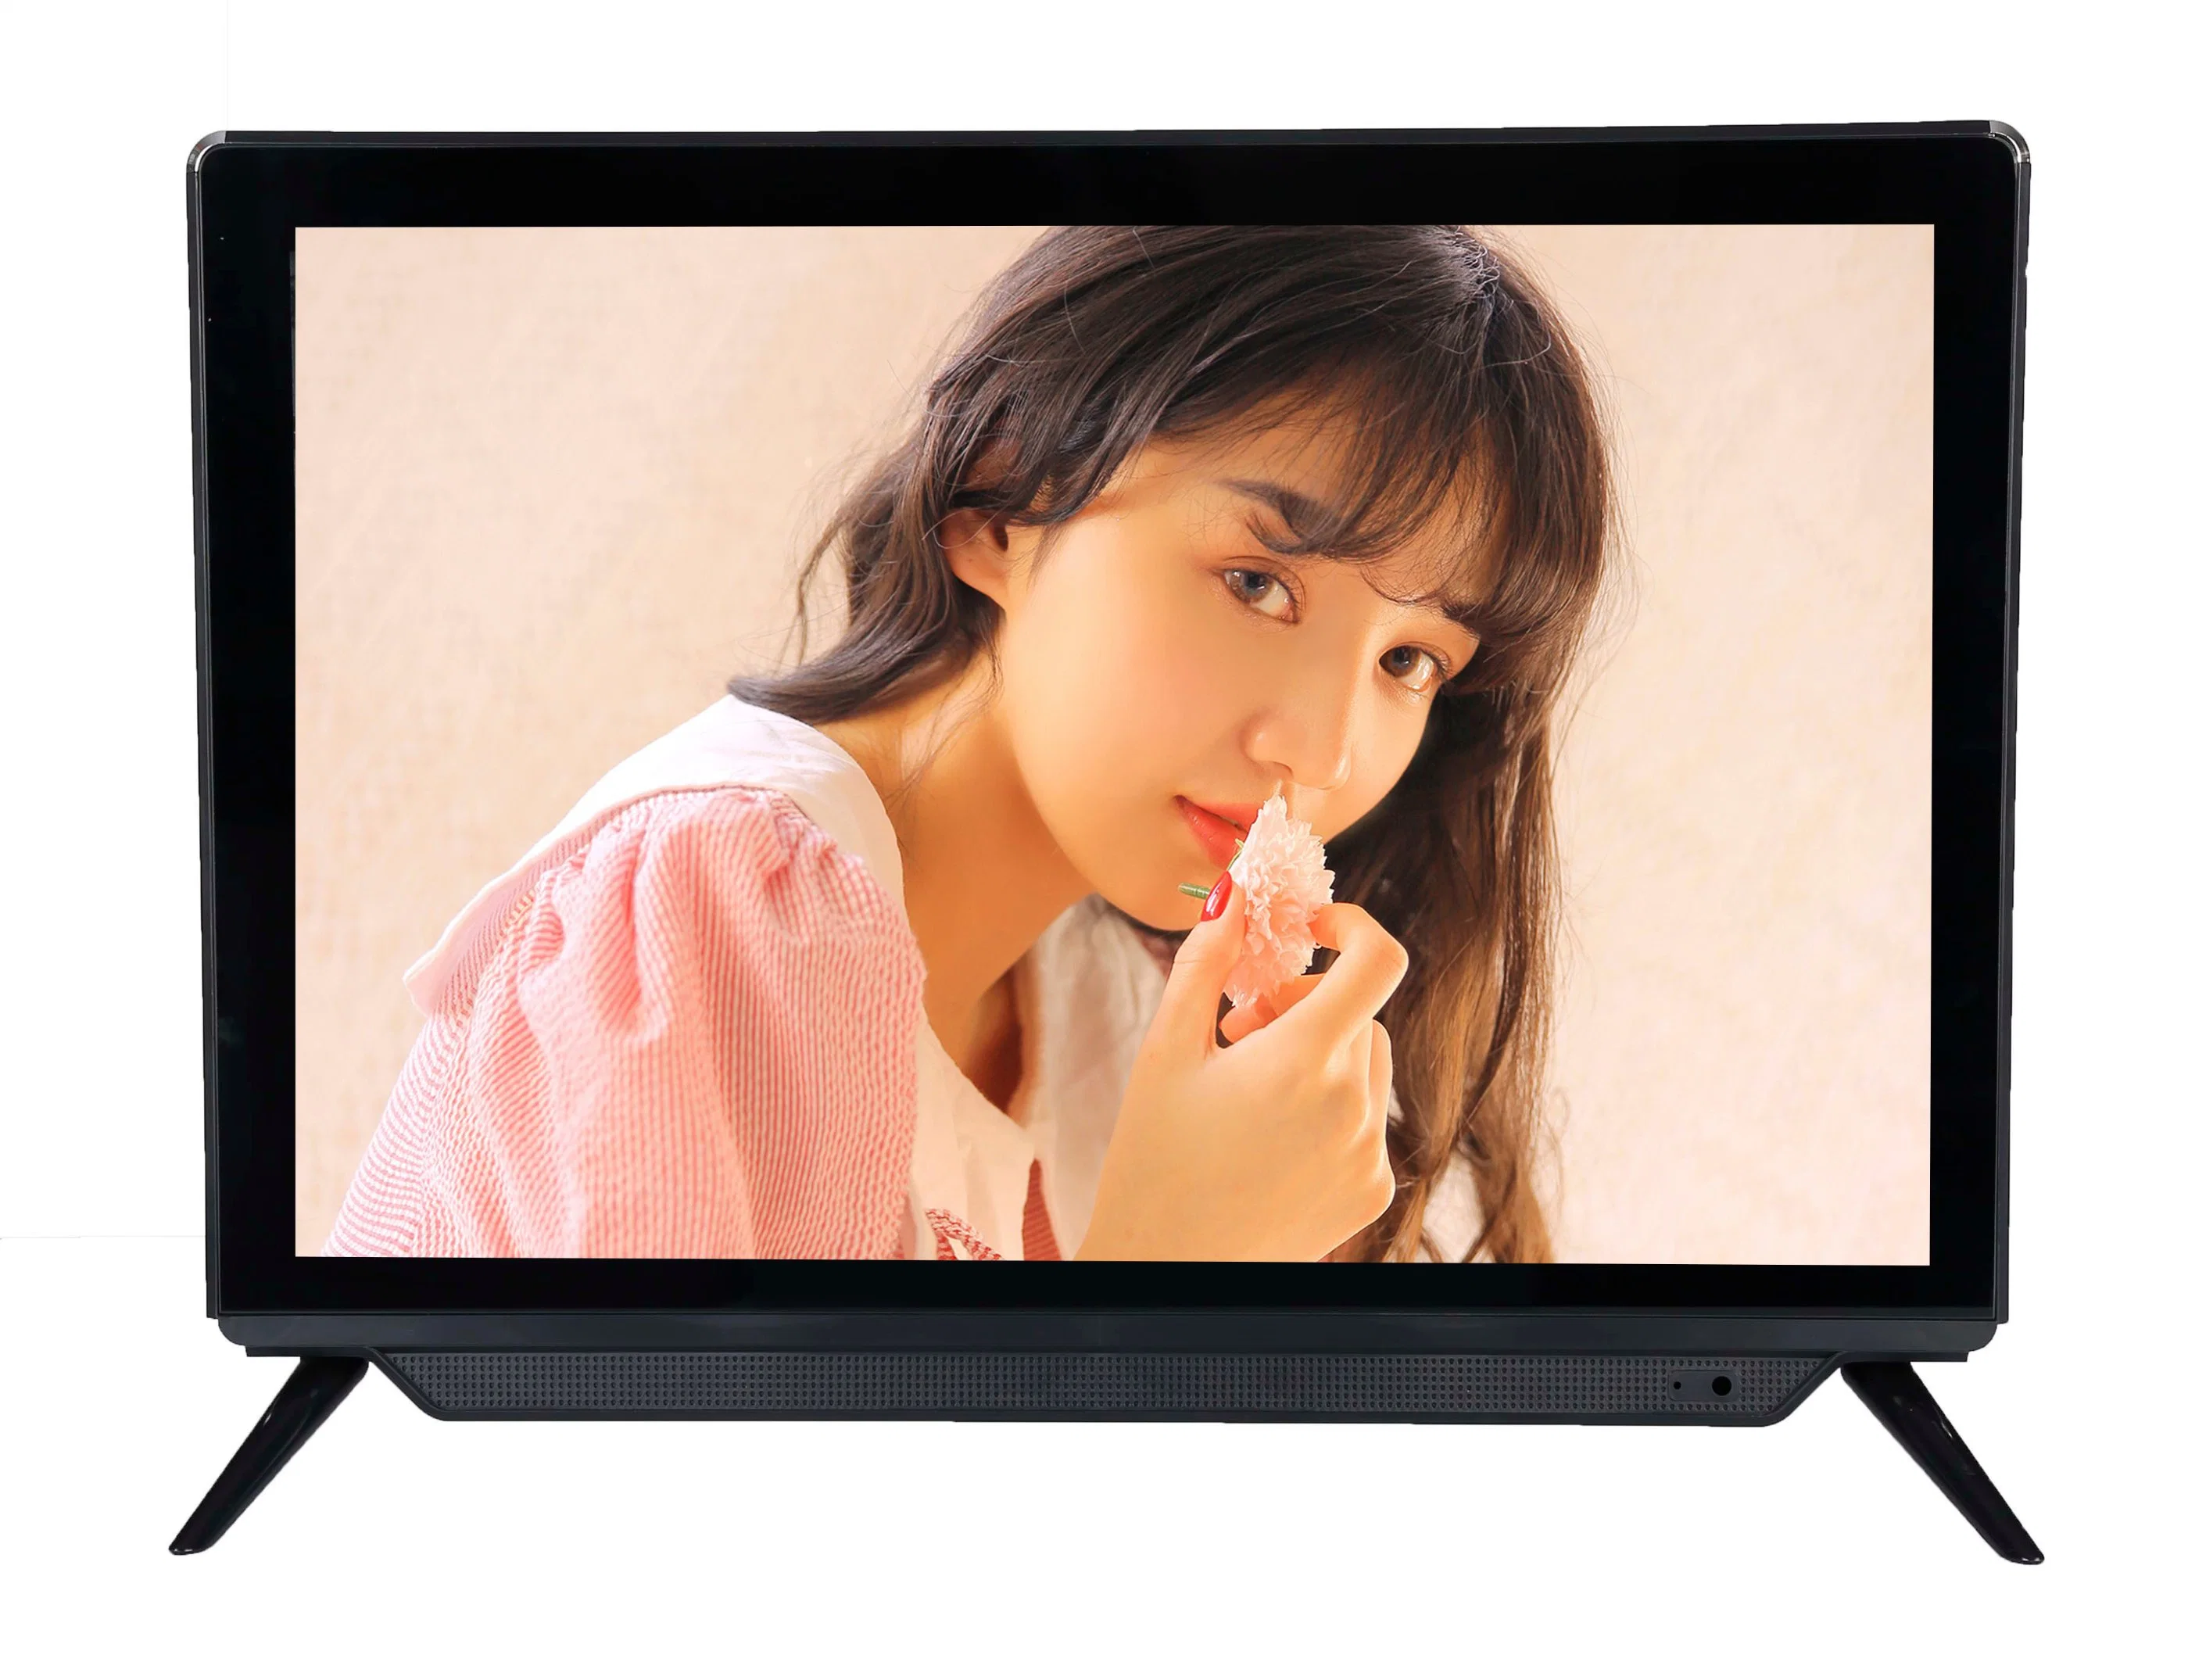 Digital-TV Farbe 17 19 Zoll Tragbarer Fernseher 12V DC Fernseher